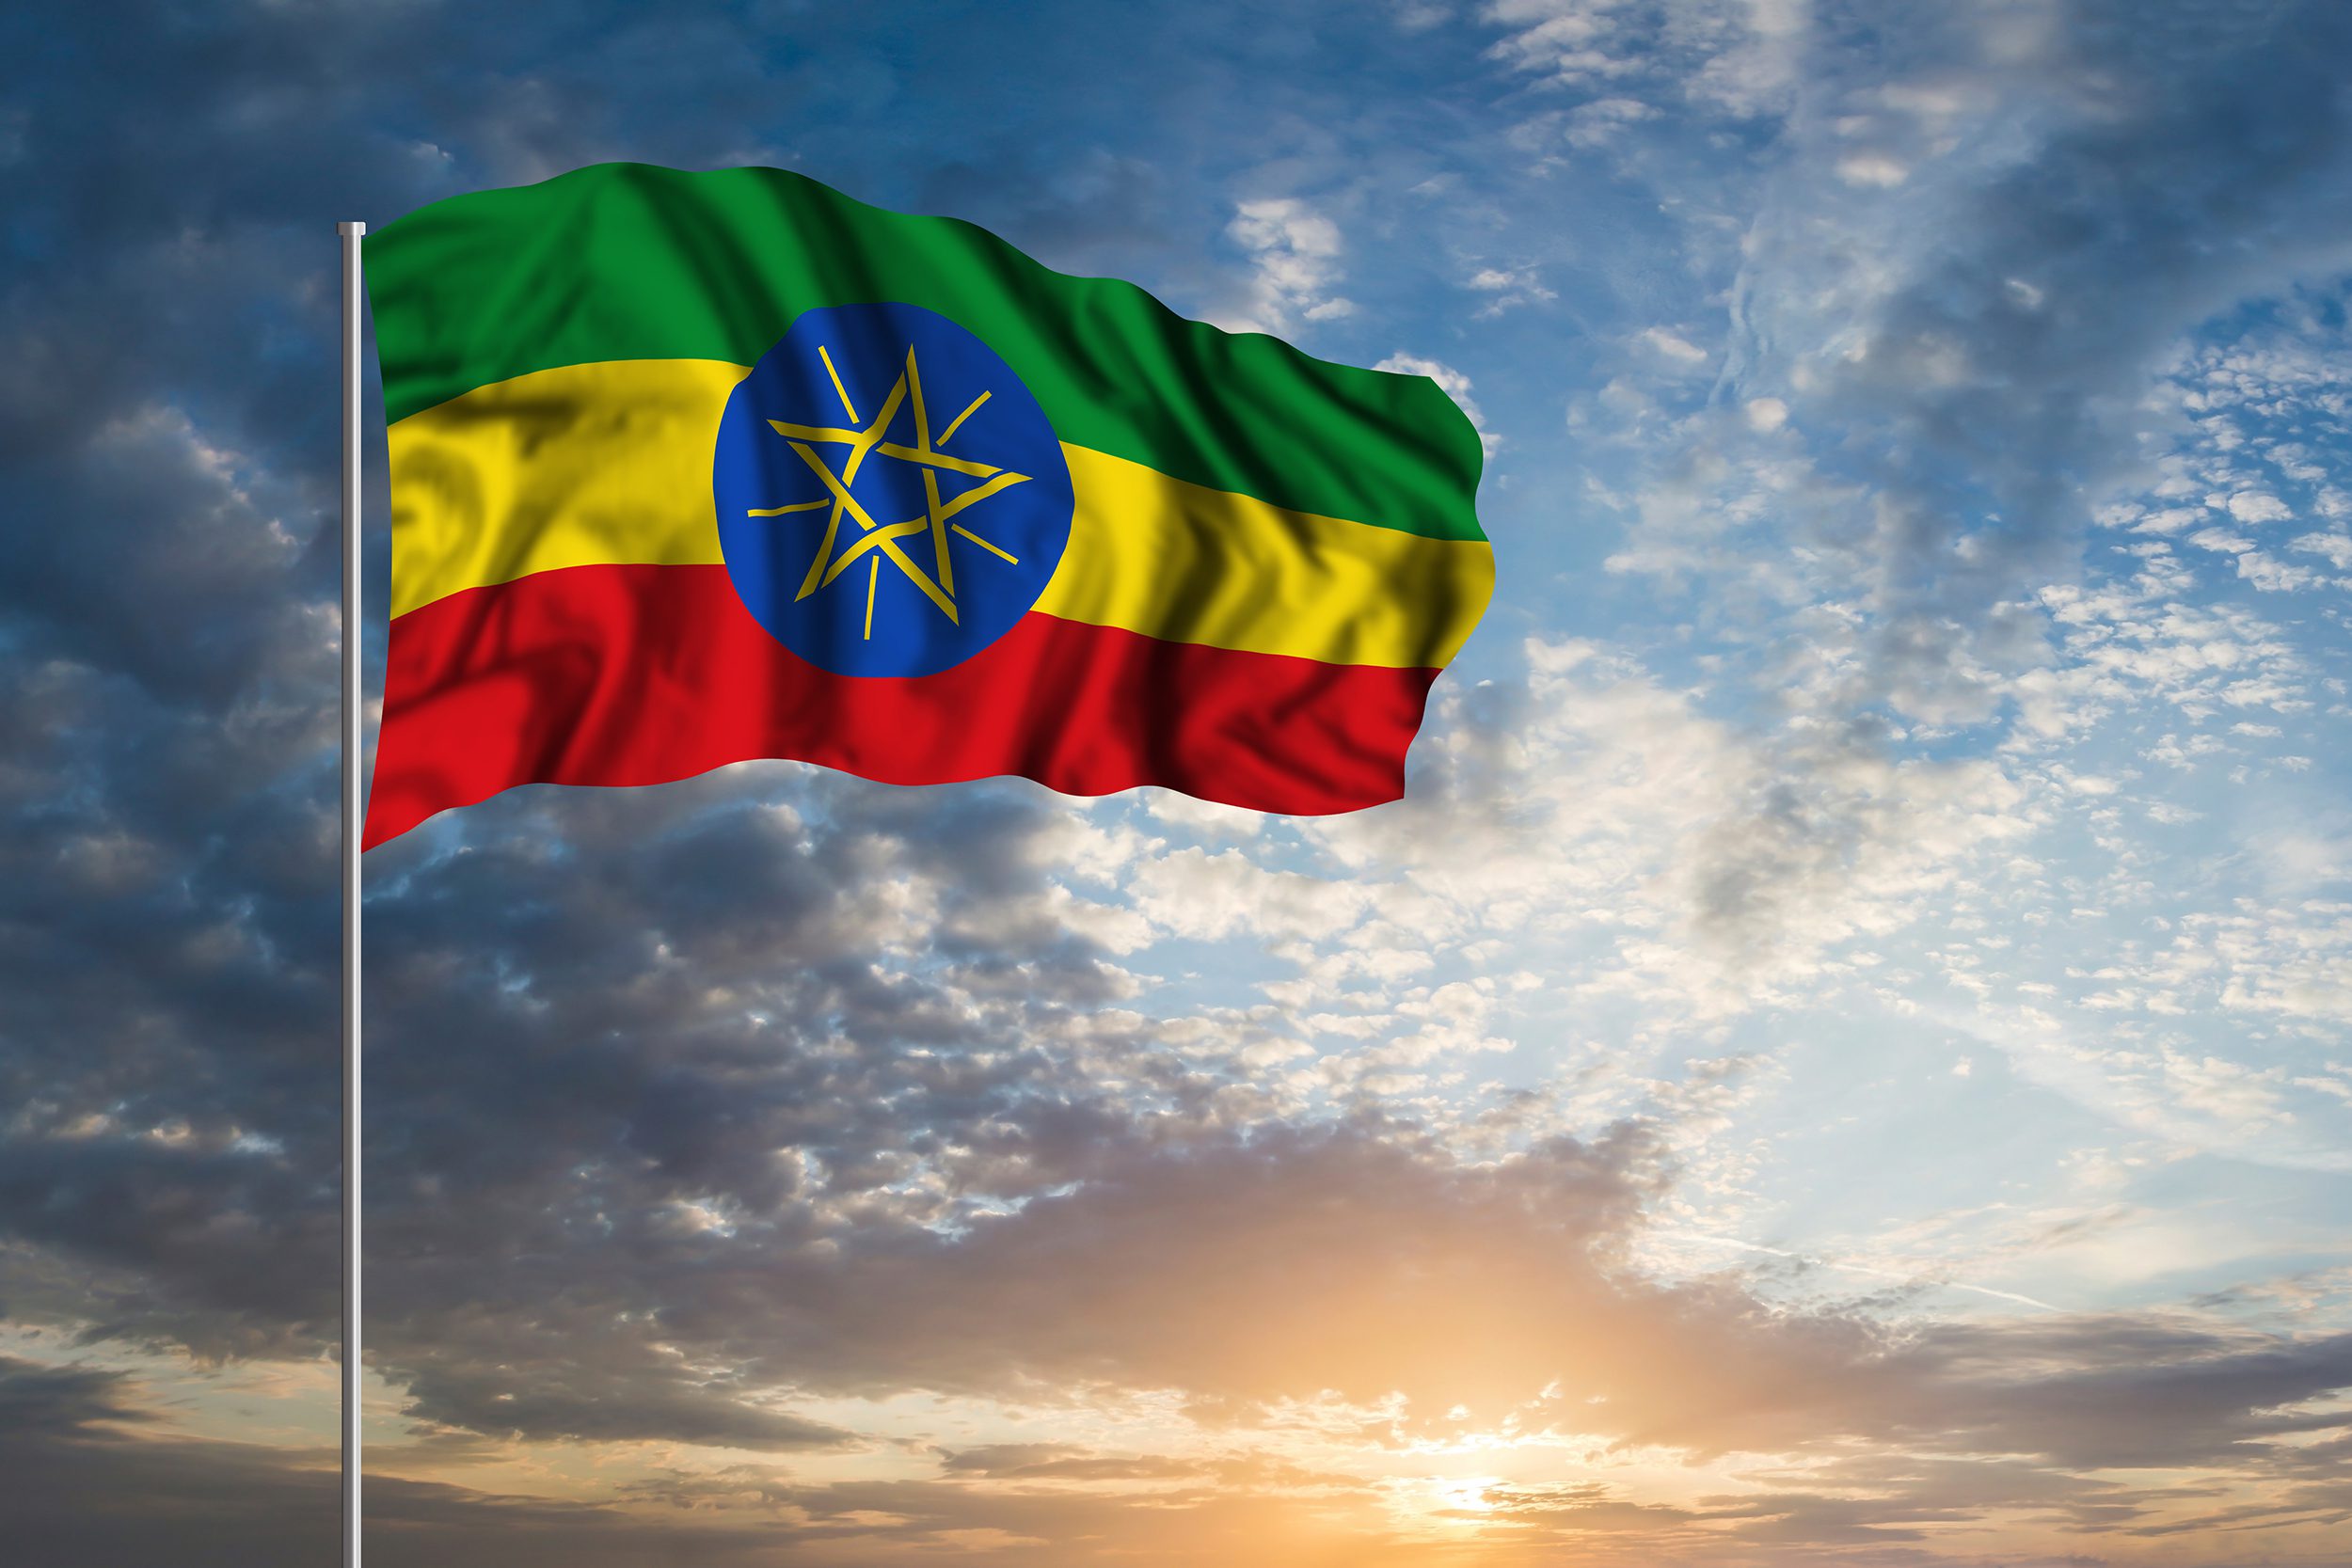 Waving National flag of Ethiopia in beautiful sky